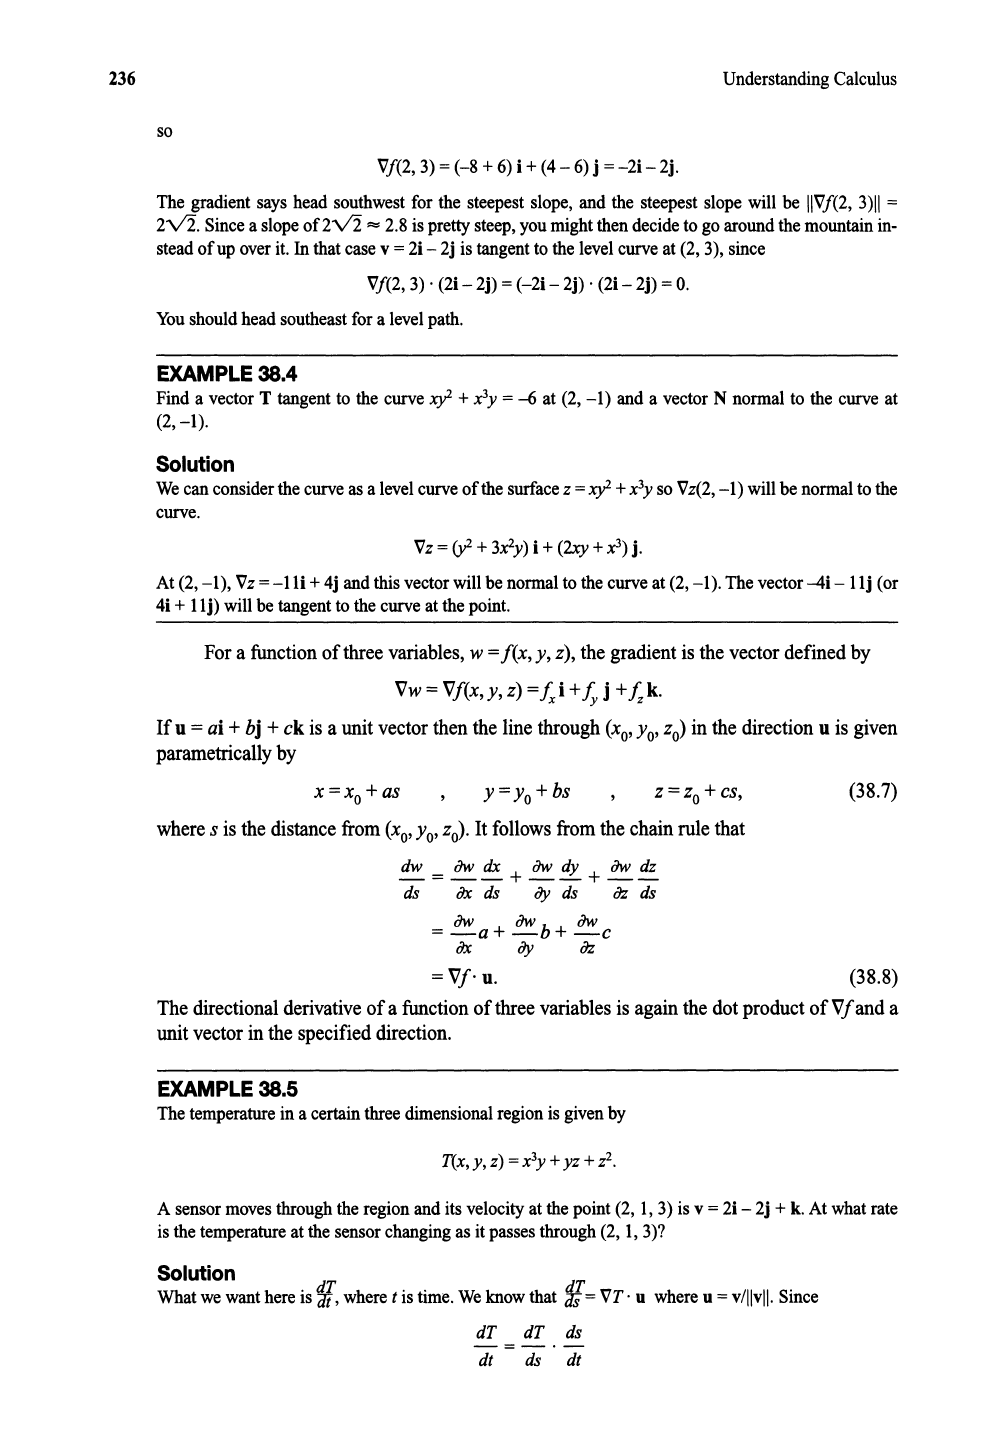 Bear H S Understanding Calculus